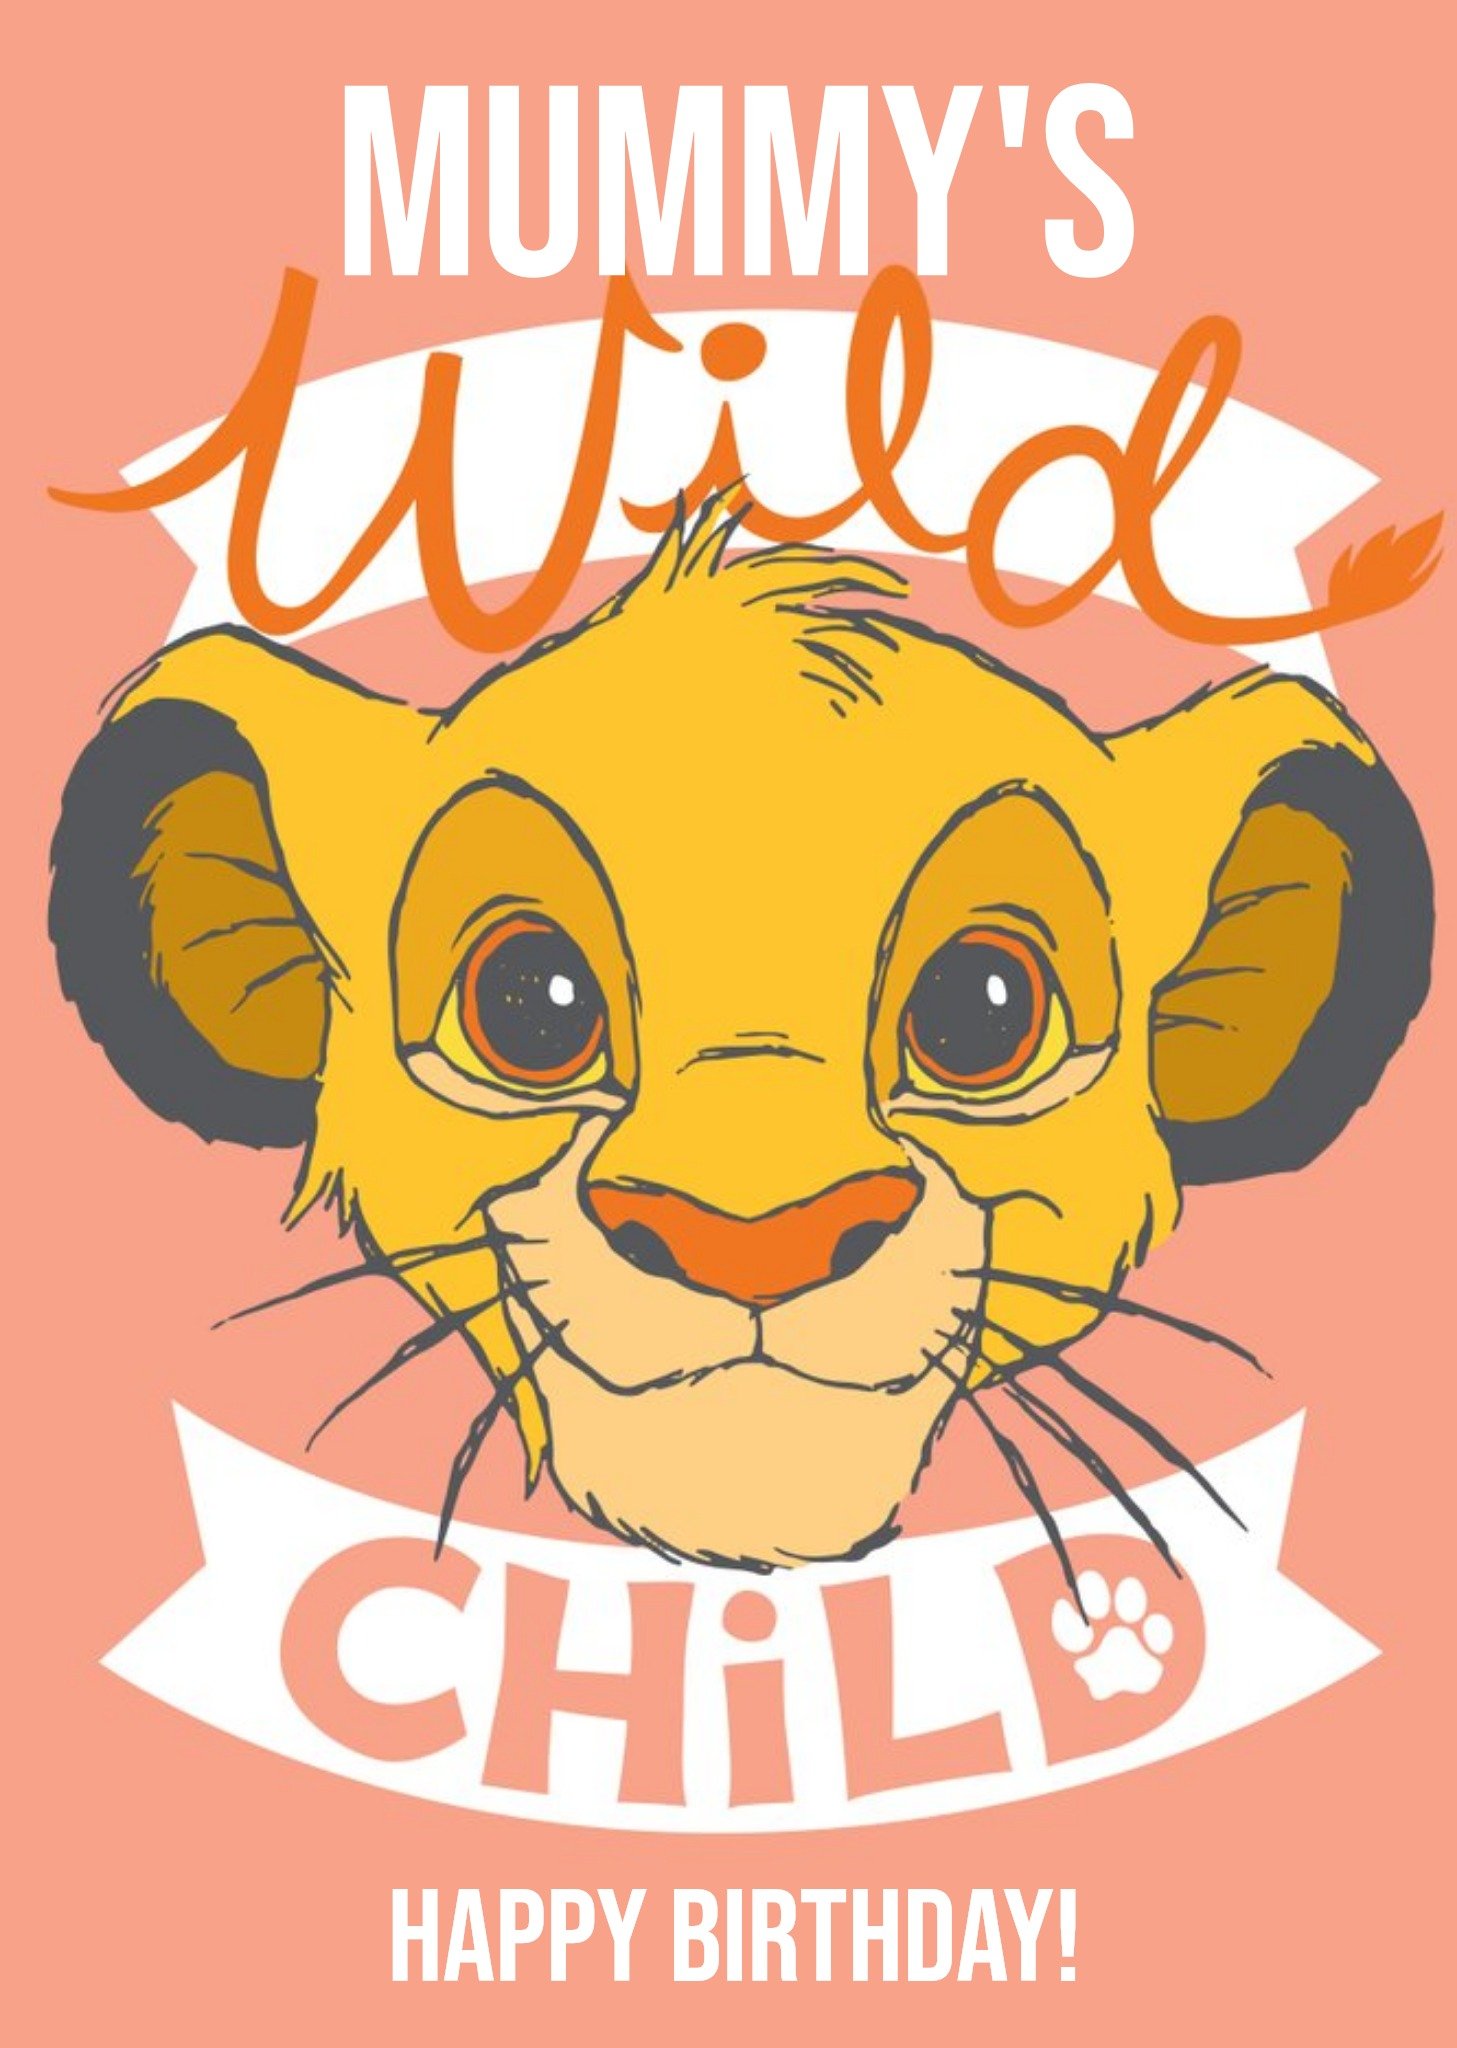 Disney The Lion King Mummy's Wild Child Simba Birthday Card Ecard